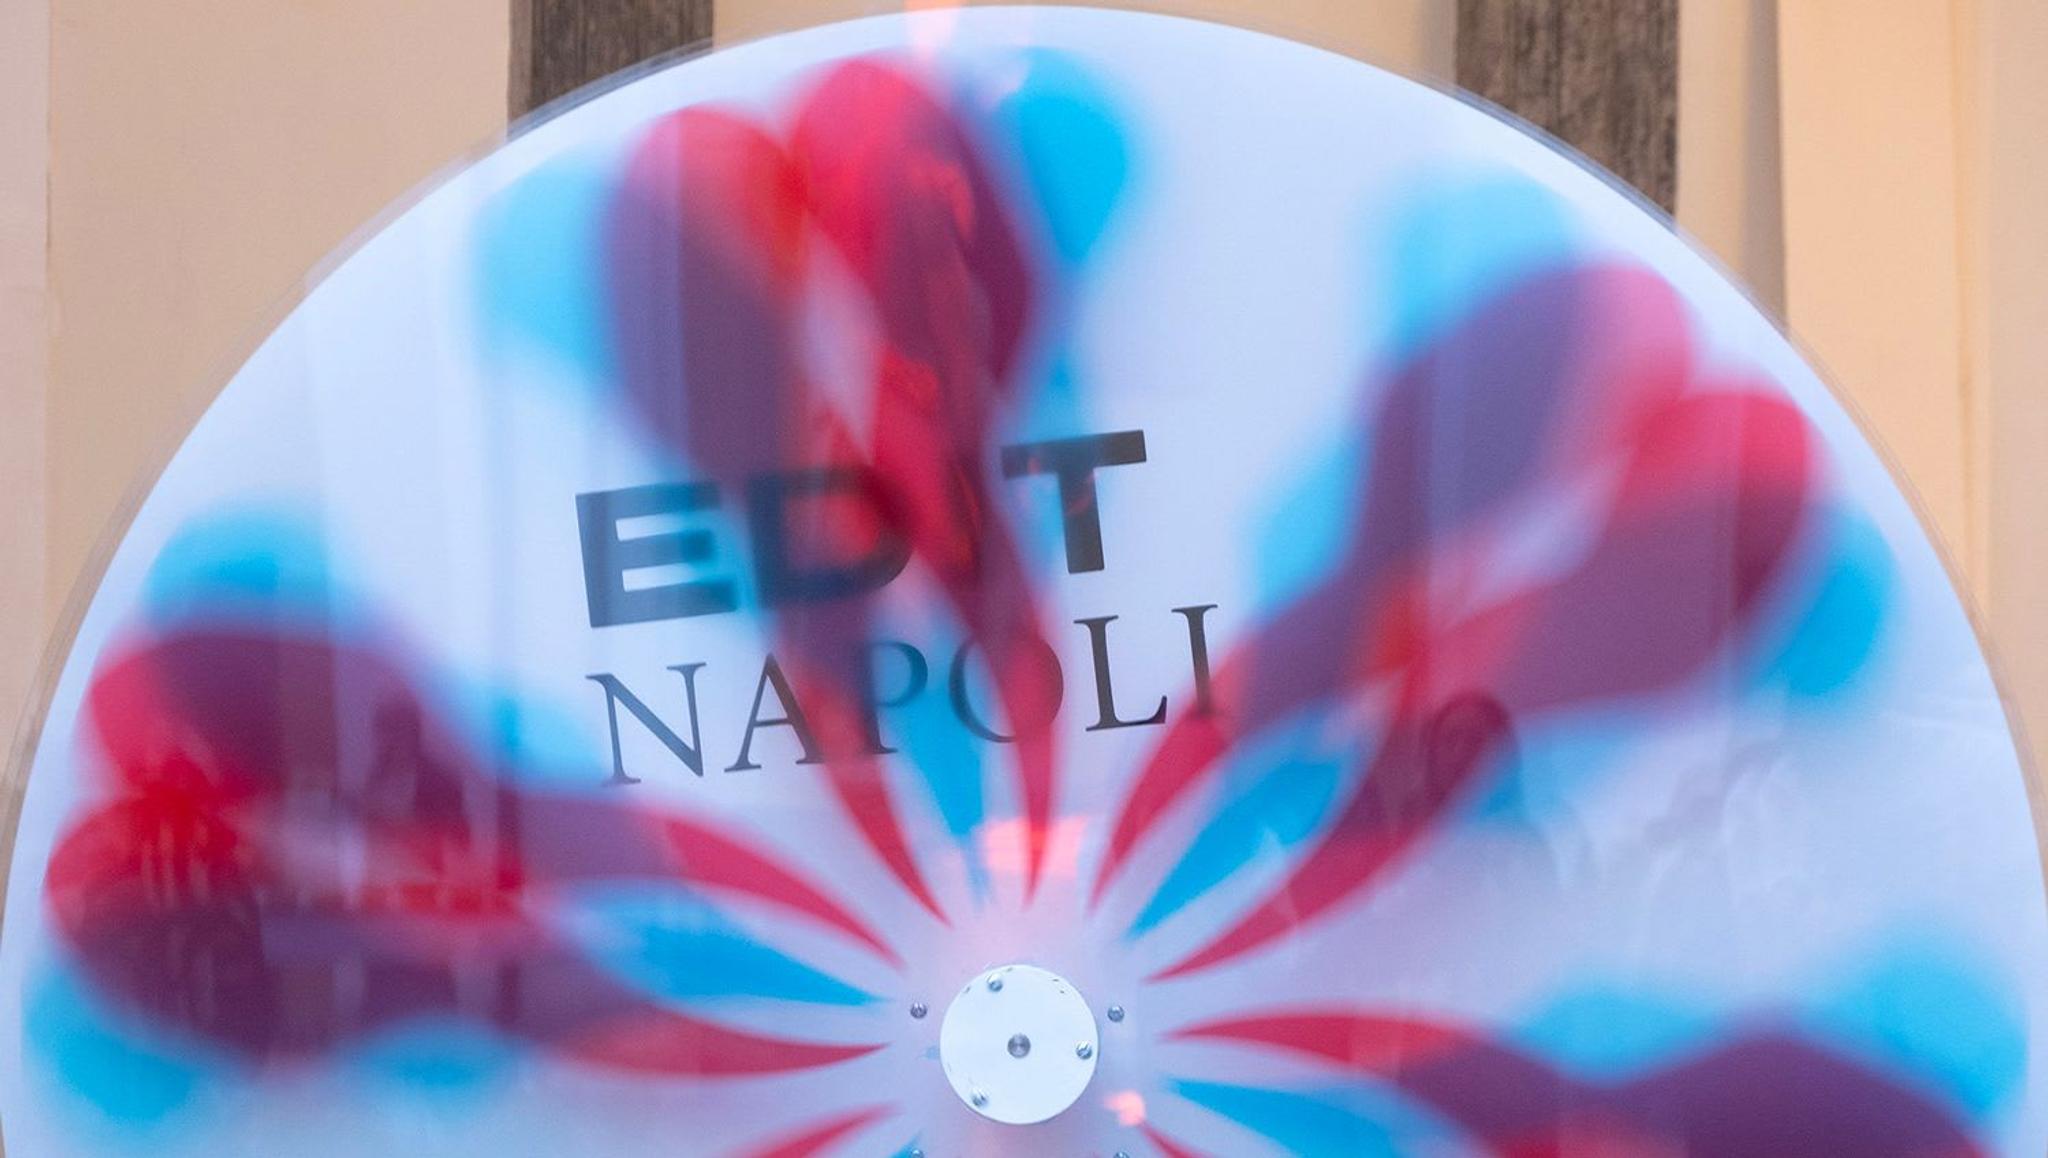 Edit Napoli 2022: a New Generation of Designers